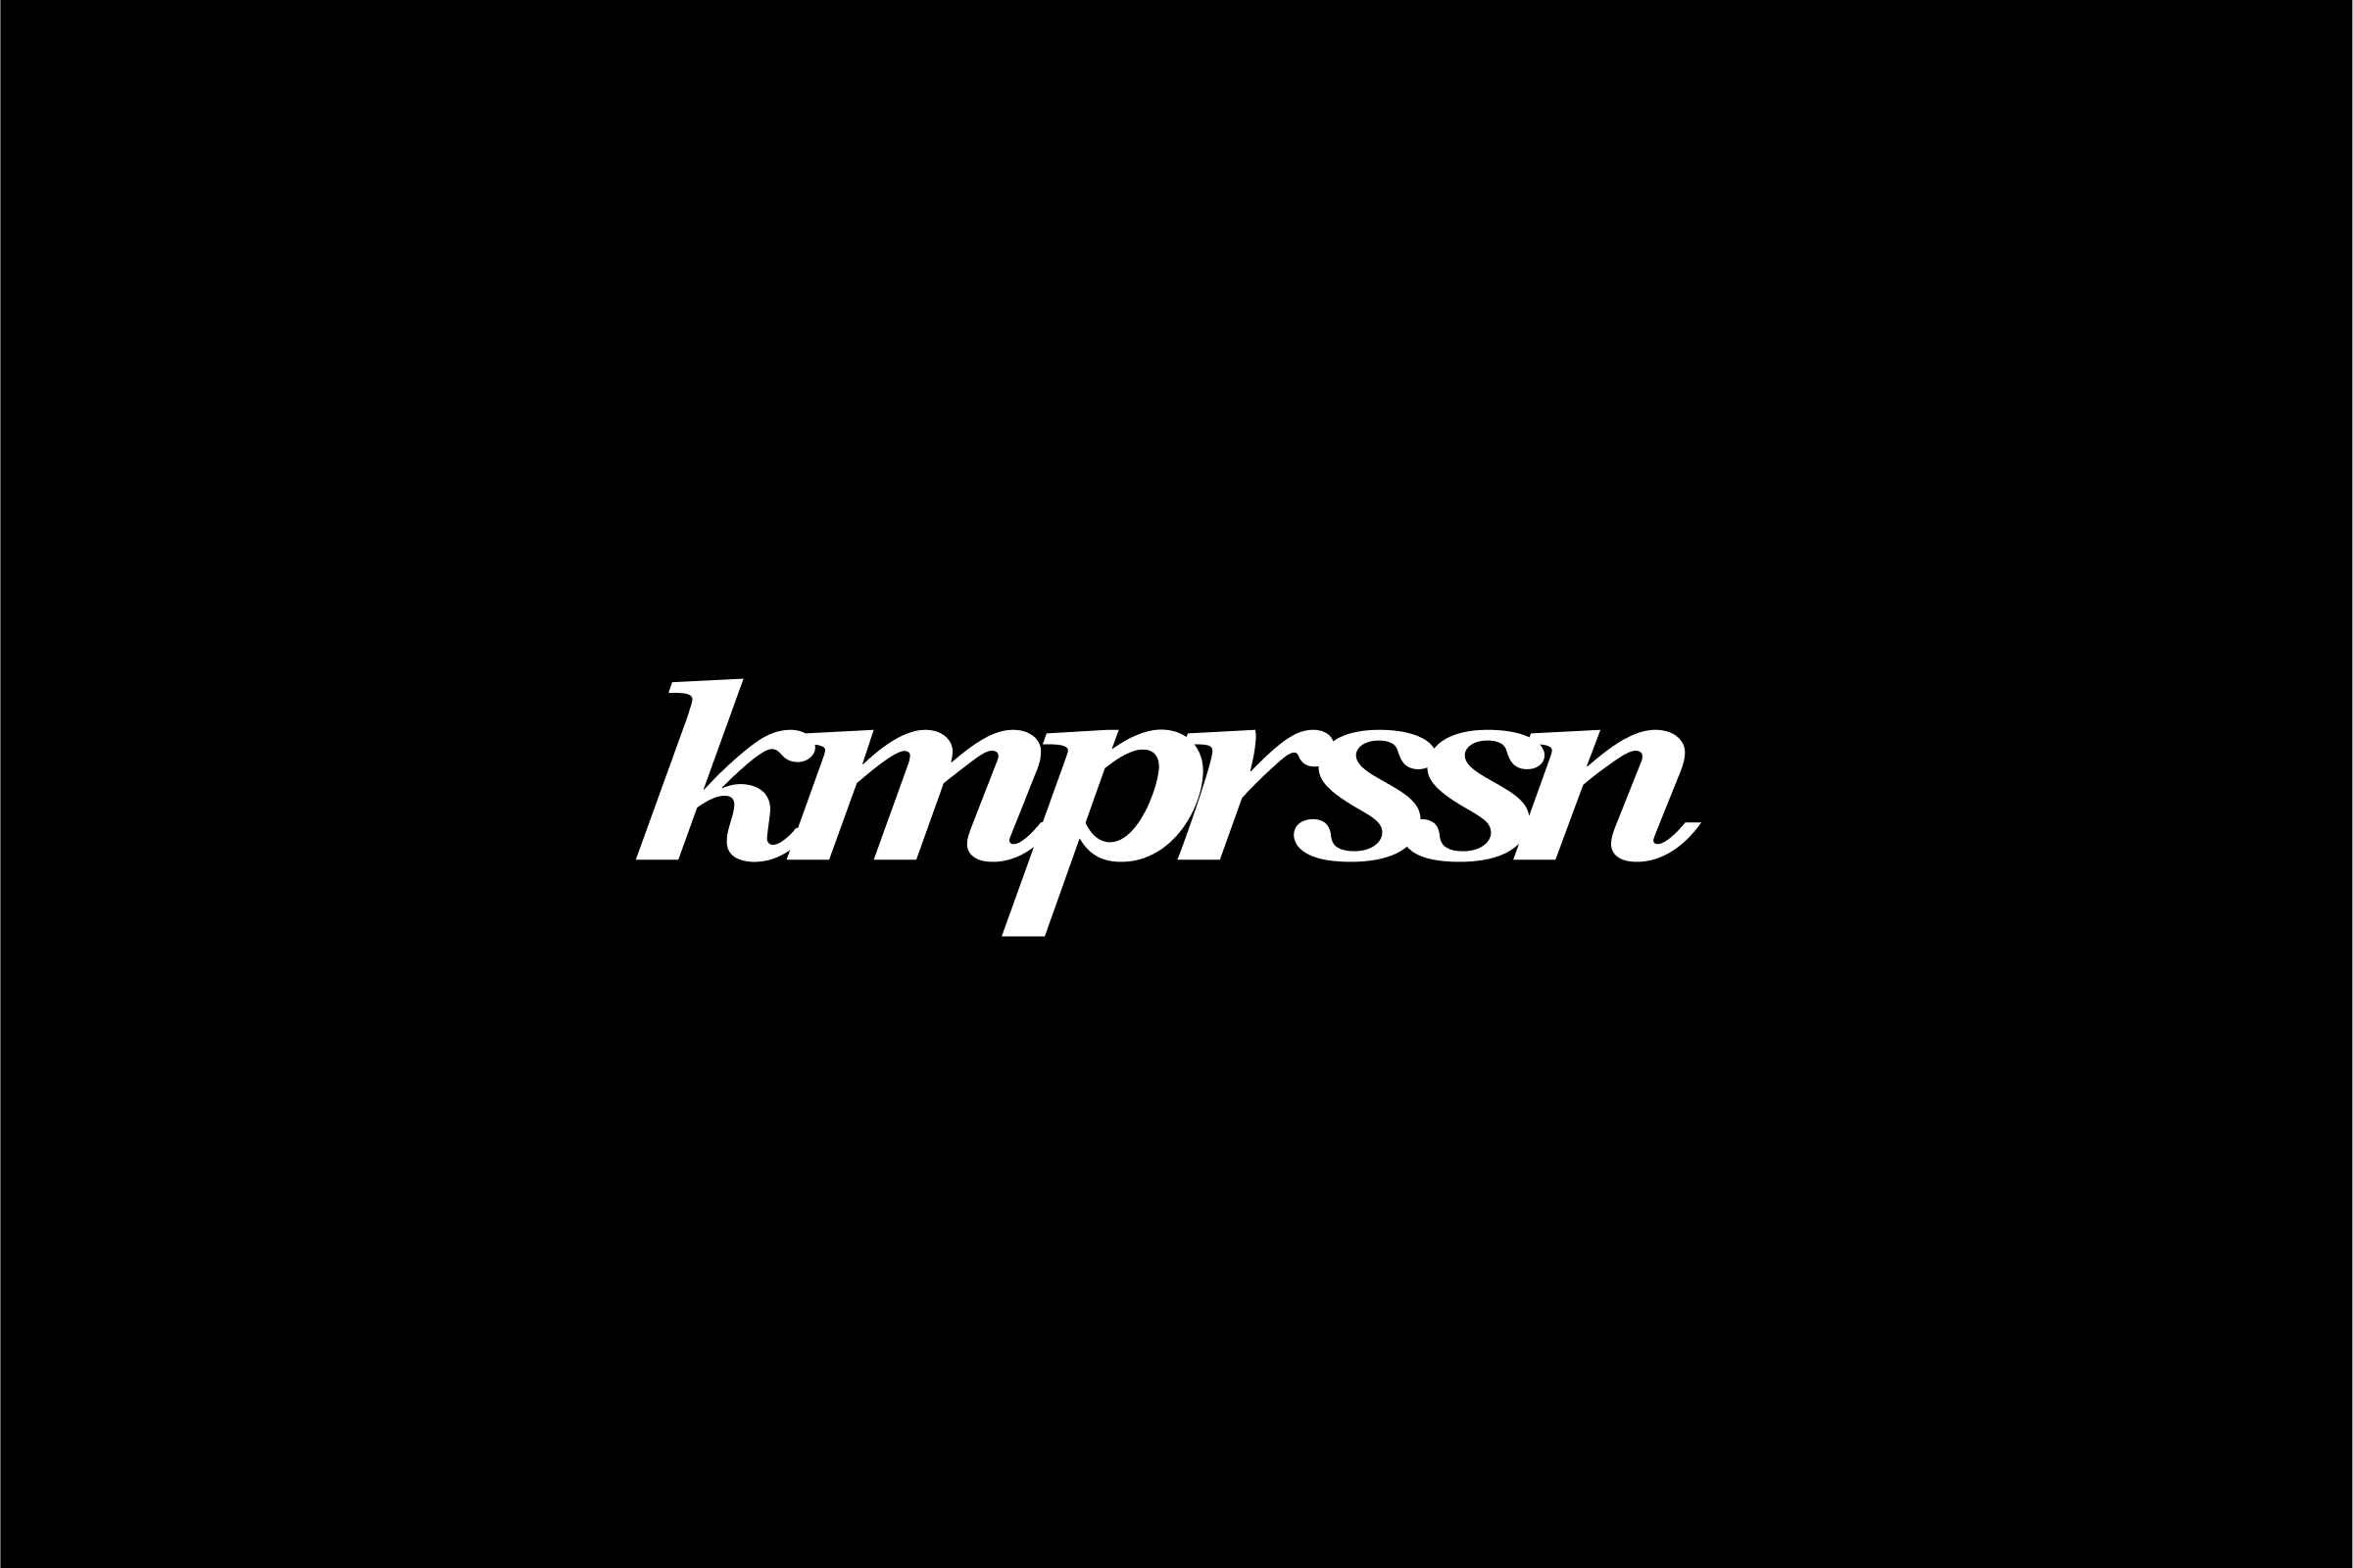 simon-p-coyle-branding-logo-design-2009-kmprssn